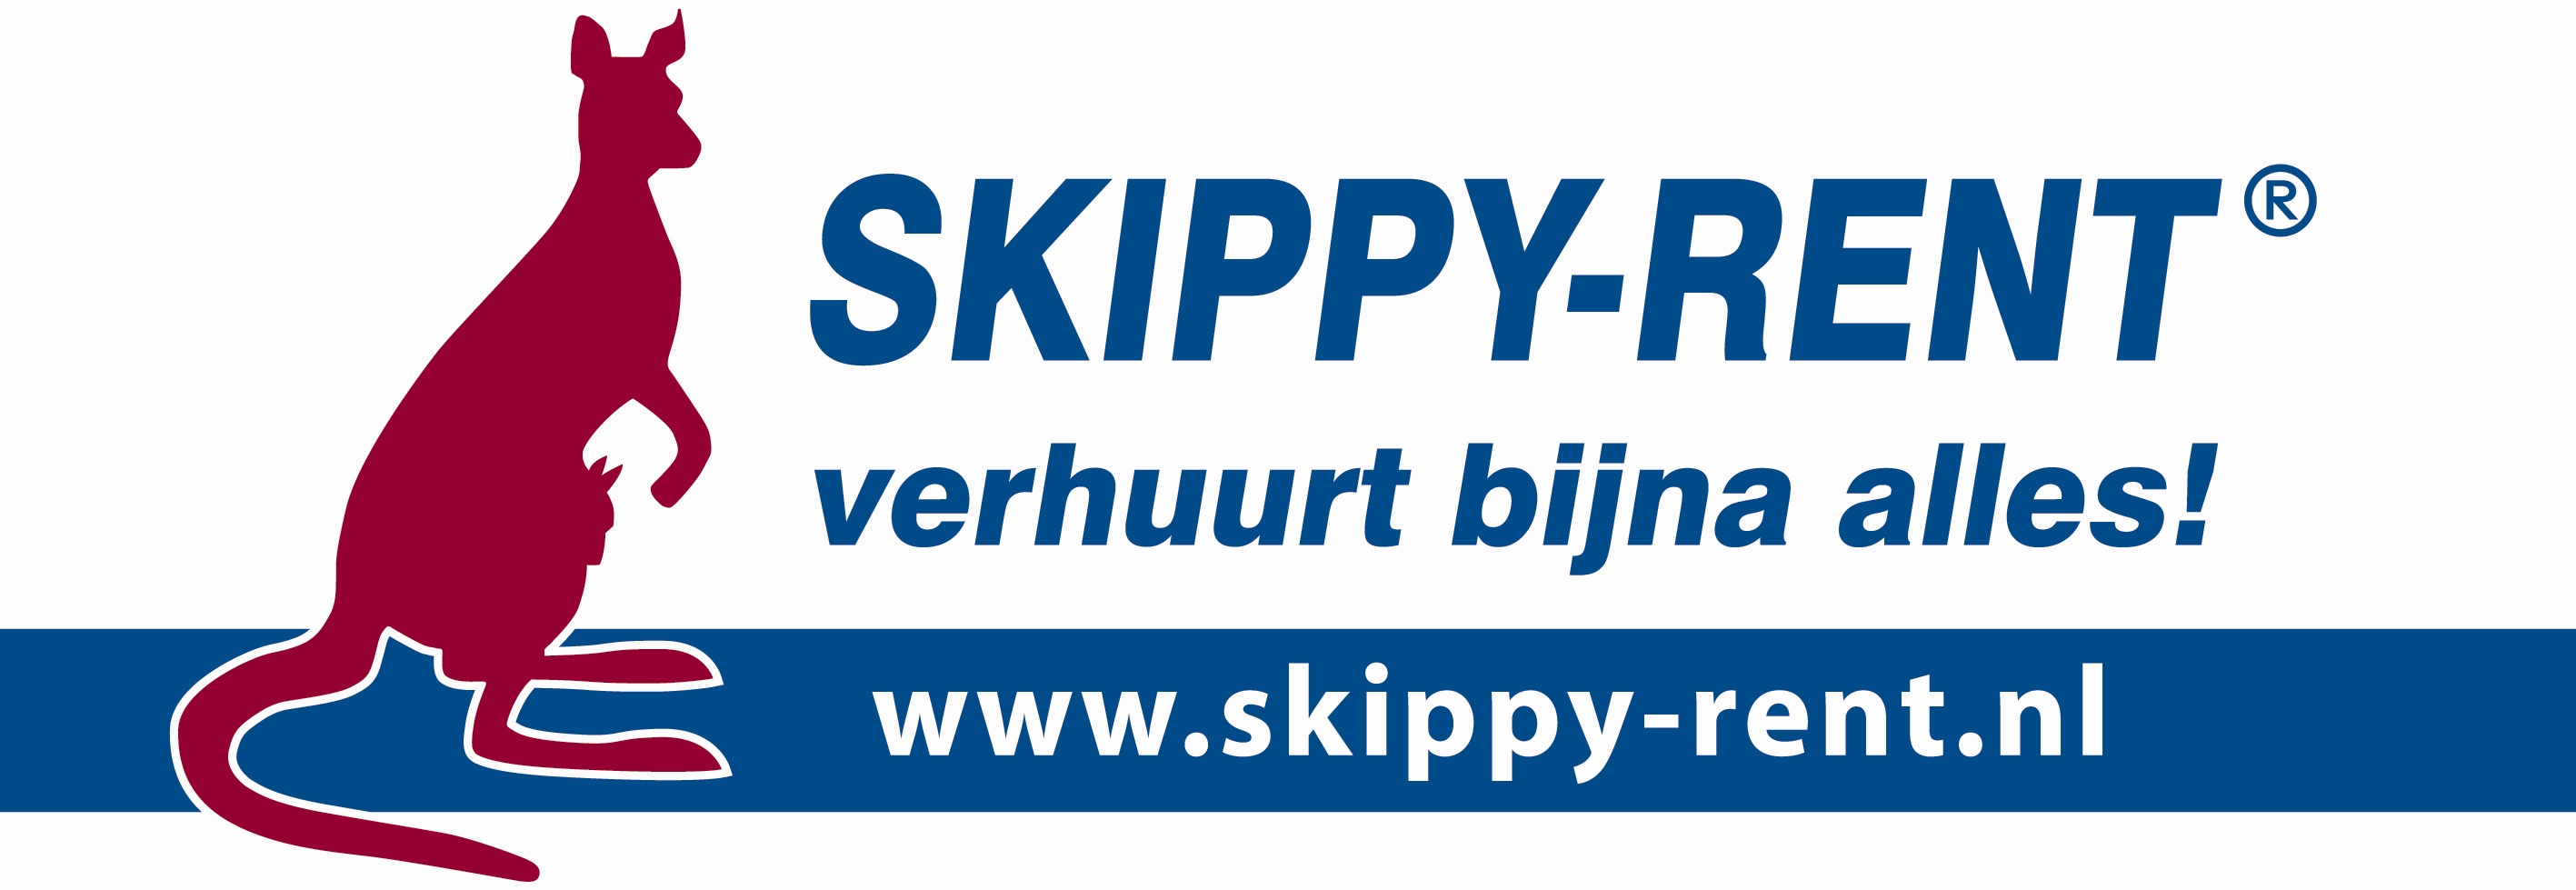 LOGO origineel skippy-rent